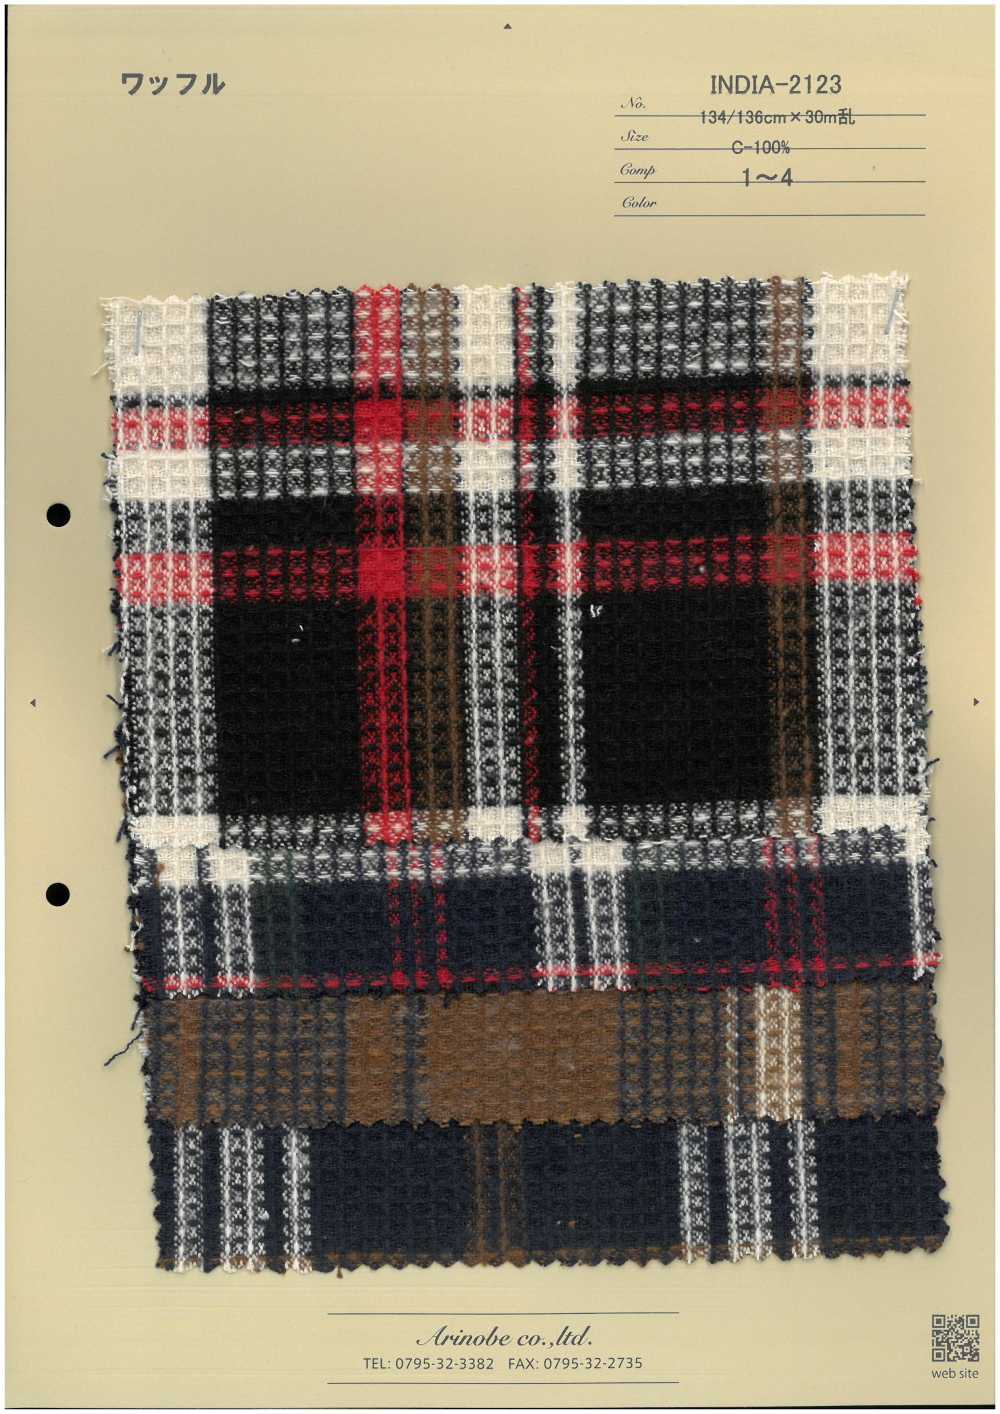 INDIA-2123 Tricot Gaufré[Fabrication De Textile] ARINOBE CO., LTD.